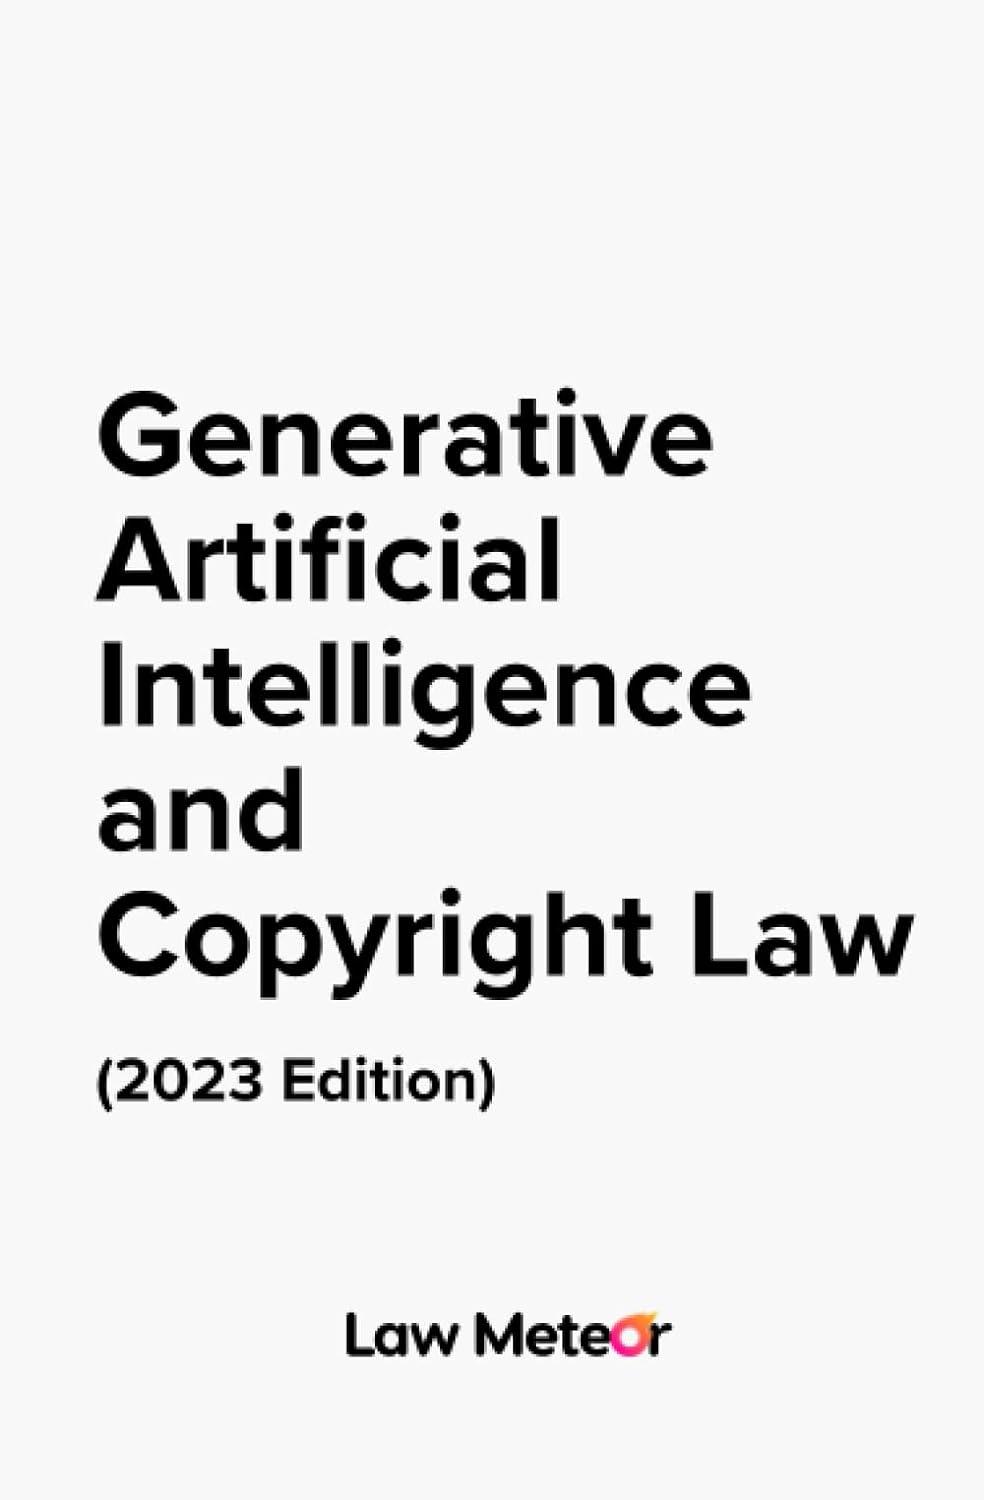 generative artificial intelligence and copyright law 2023 edition lawmeteor b0cfcyr1my, 979-8857059272